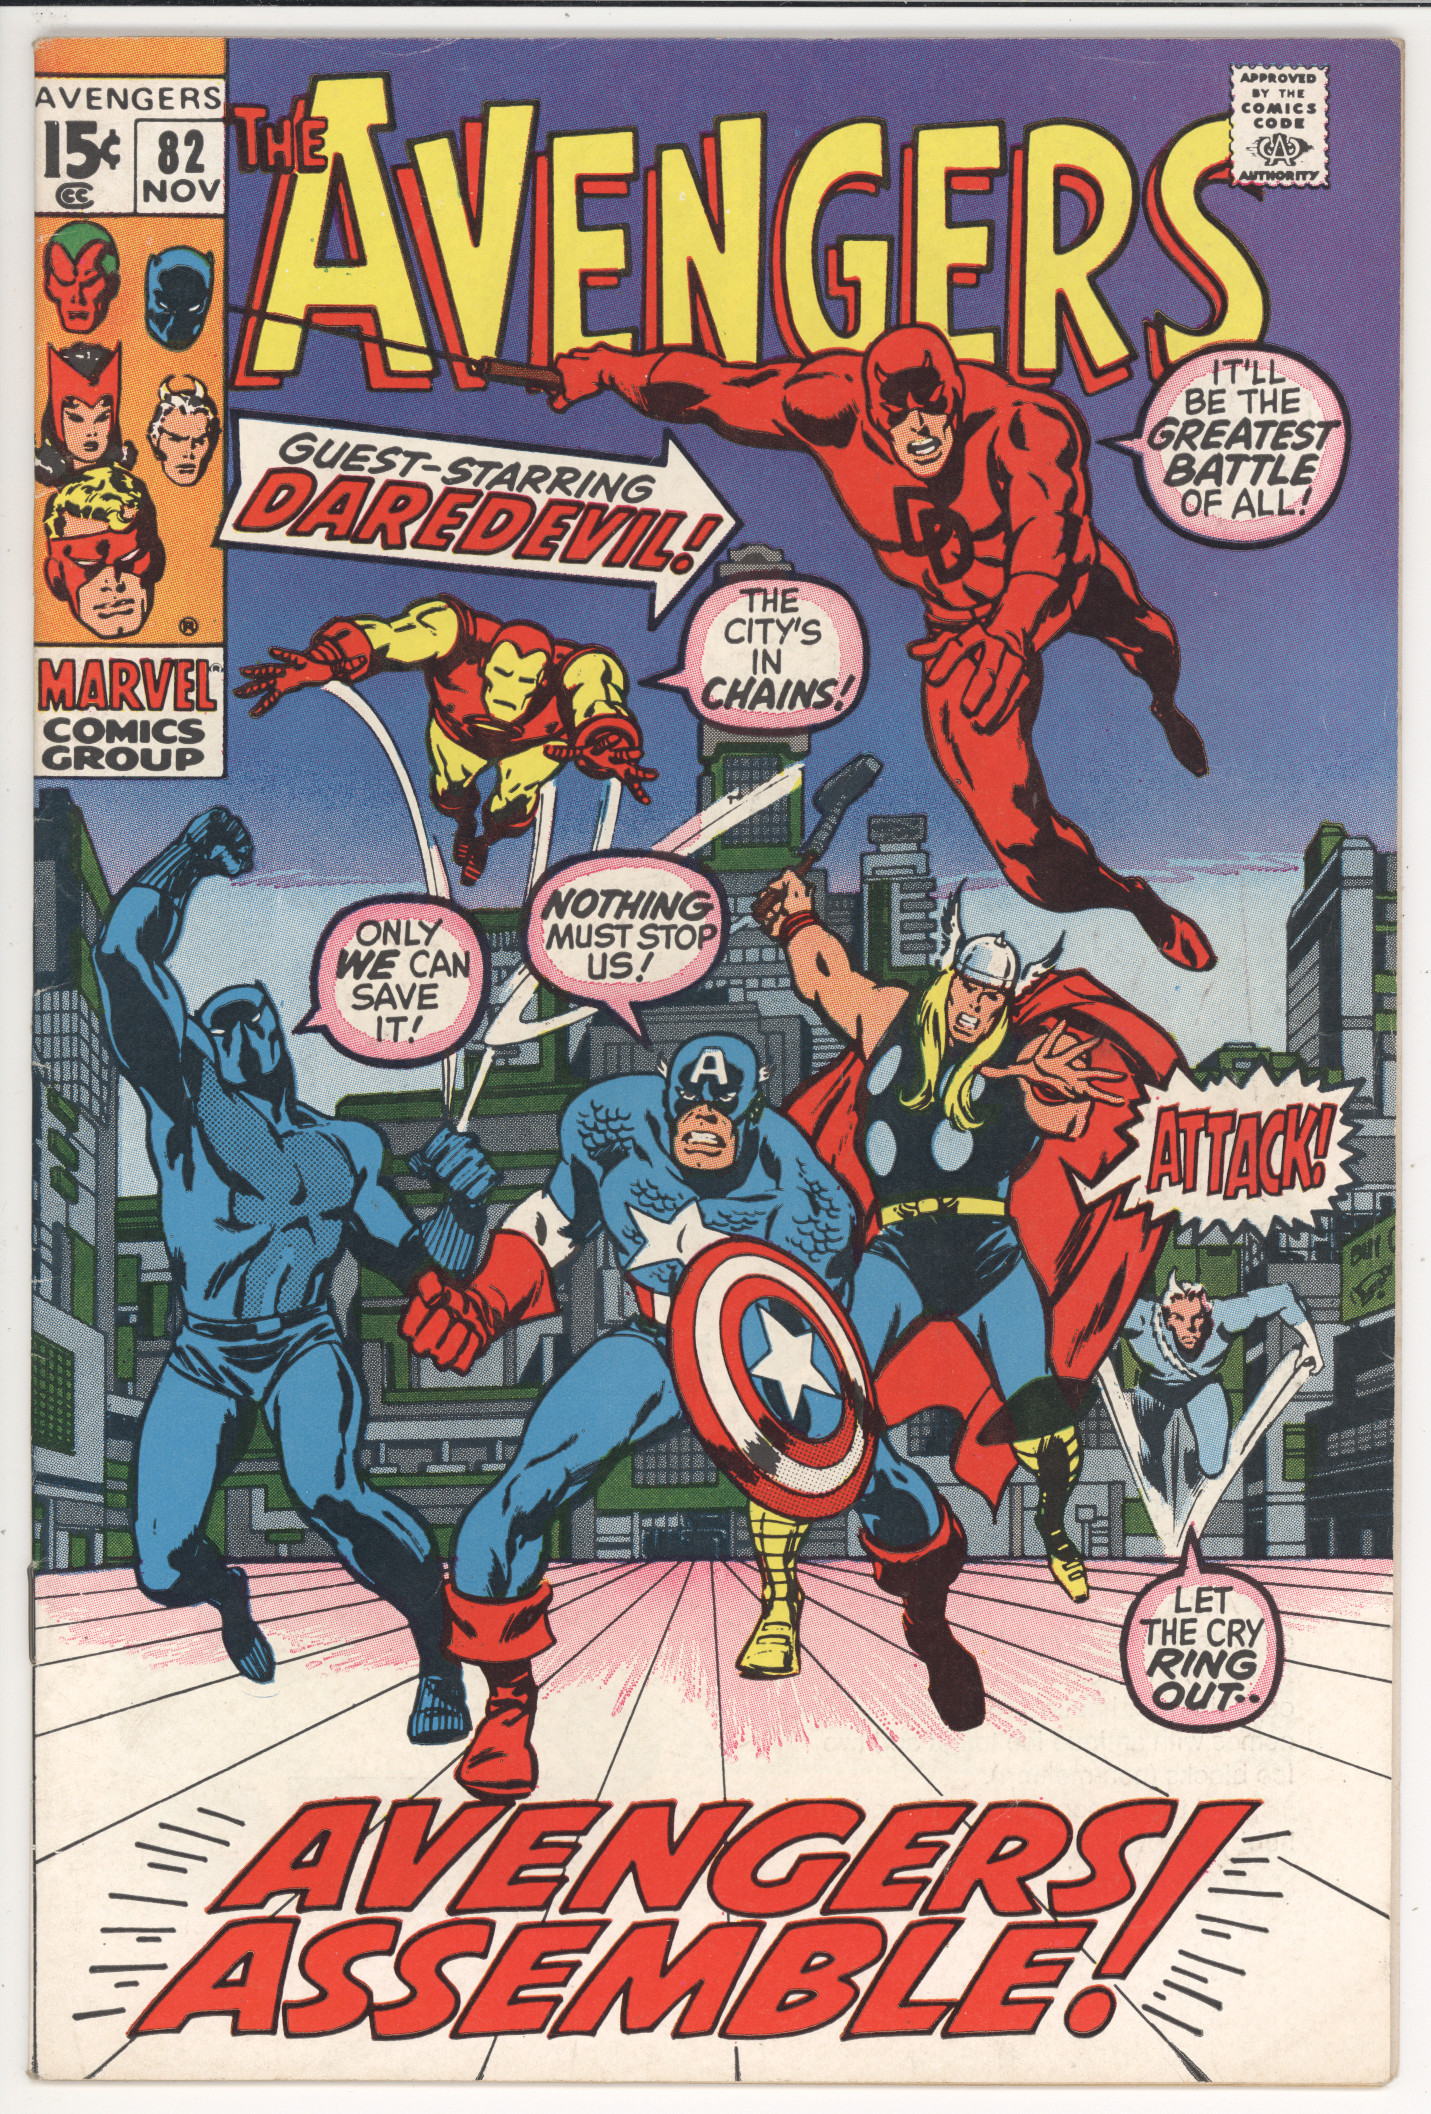 Avengers #82 front